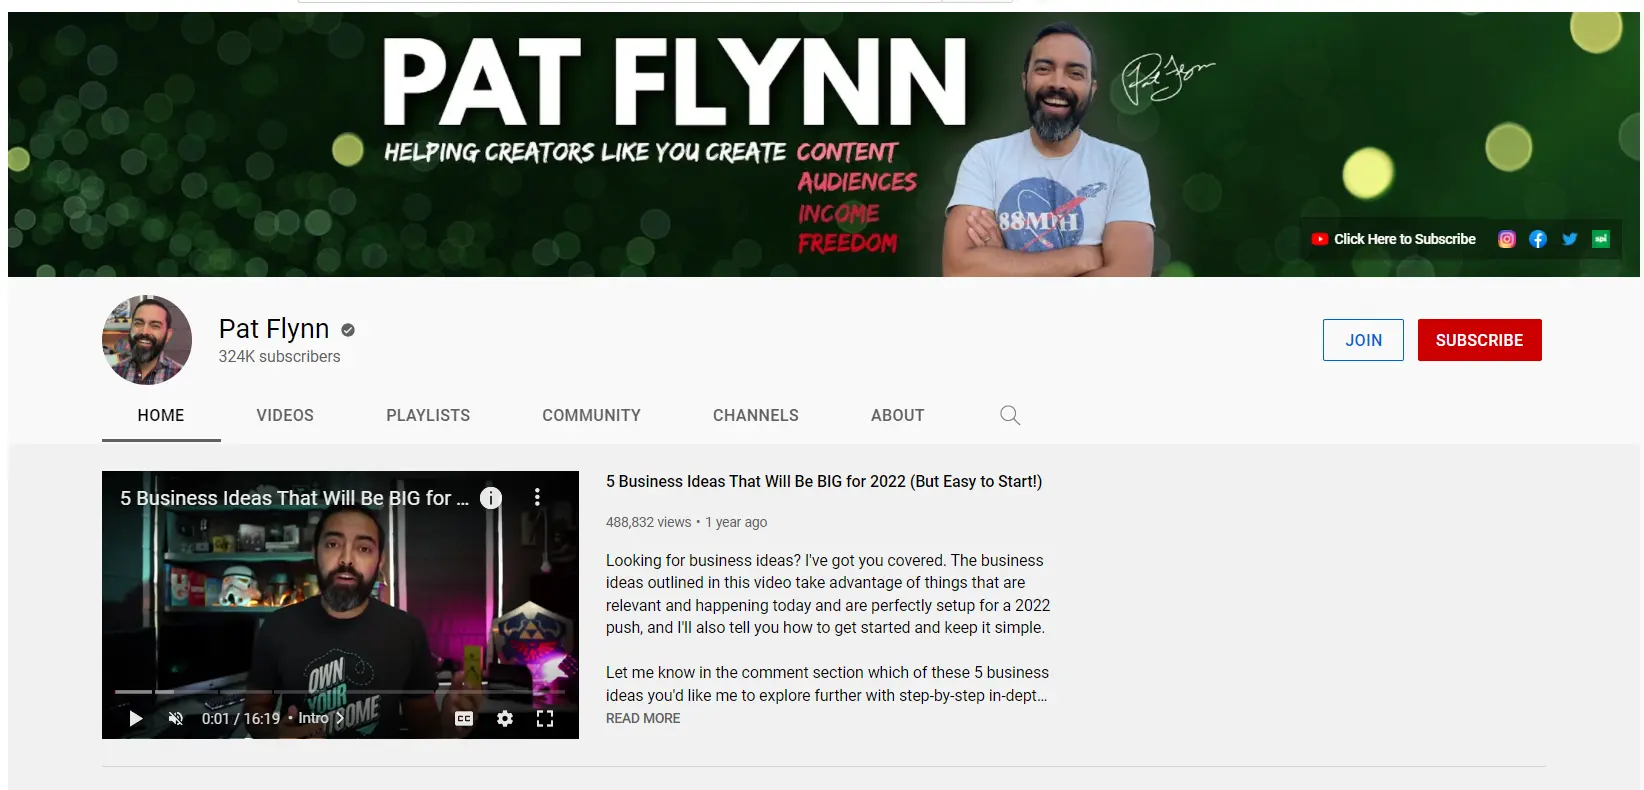 Pat Flynn’s channel on YouTube.